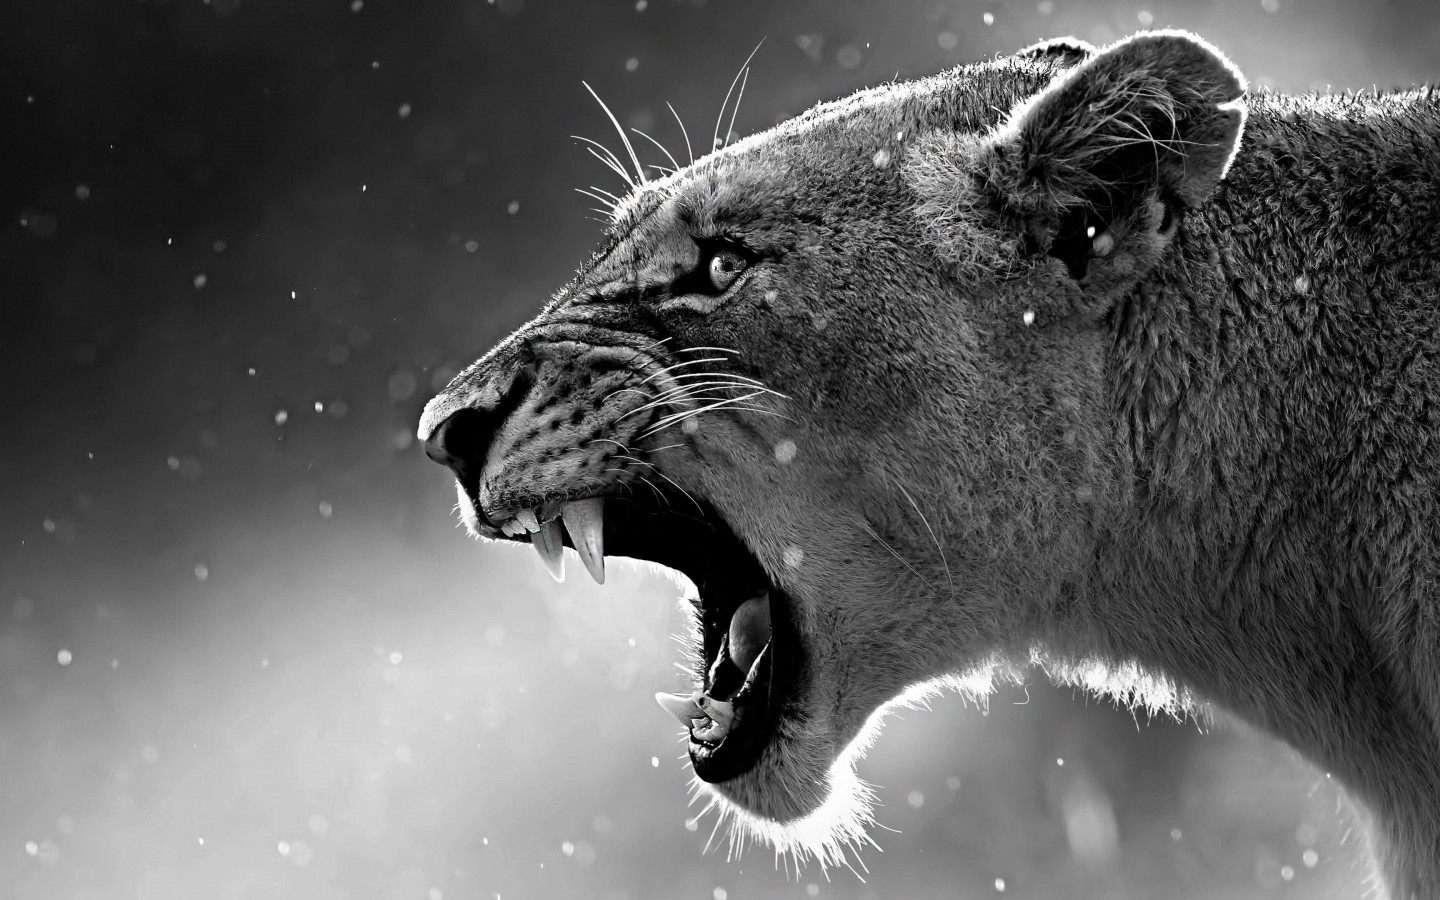 Lioness in Black & White Wallpaper for Desktop 1440x900